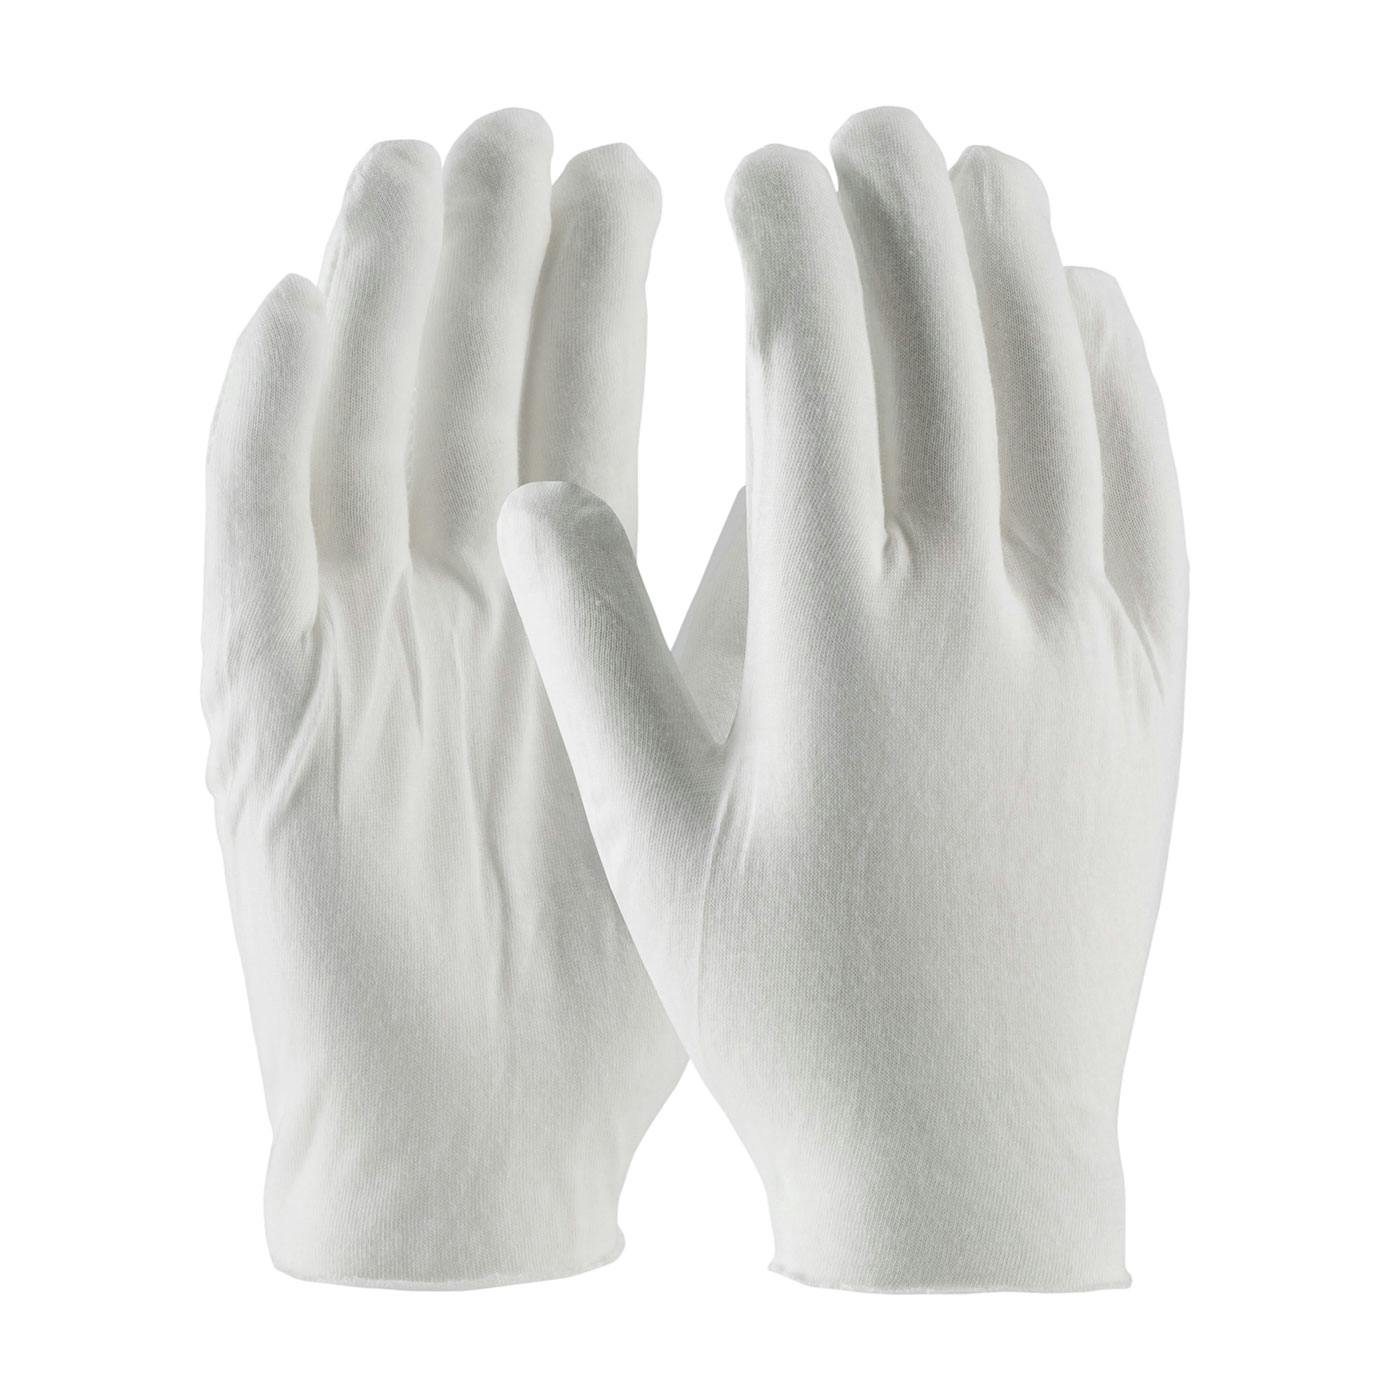 Medium Weight Cotton Lisle Inspection Glove with Unhemmed Cuff - Men's, White (97-520) - MENS